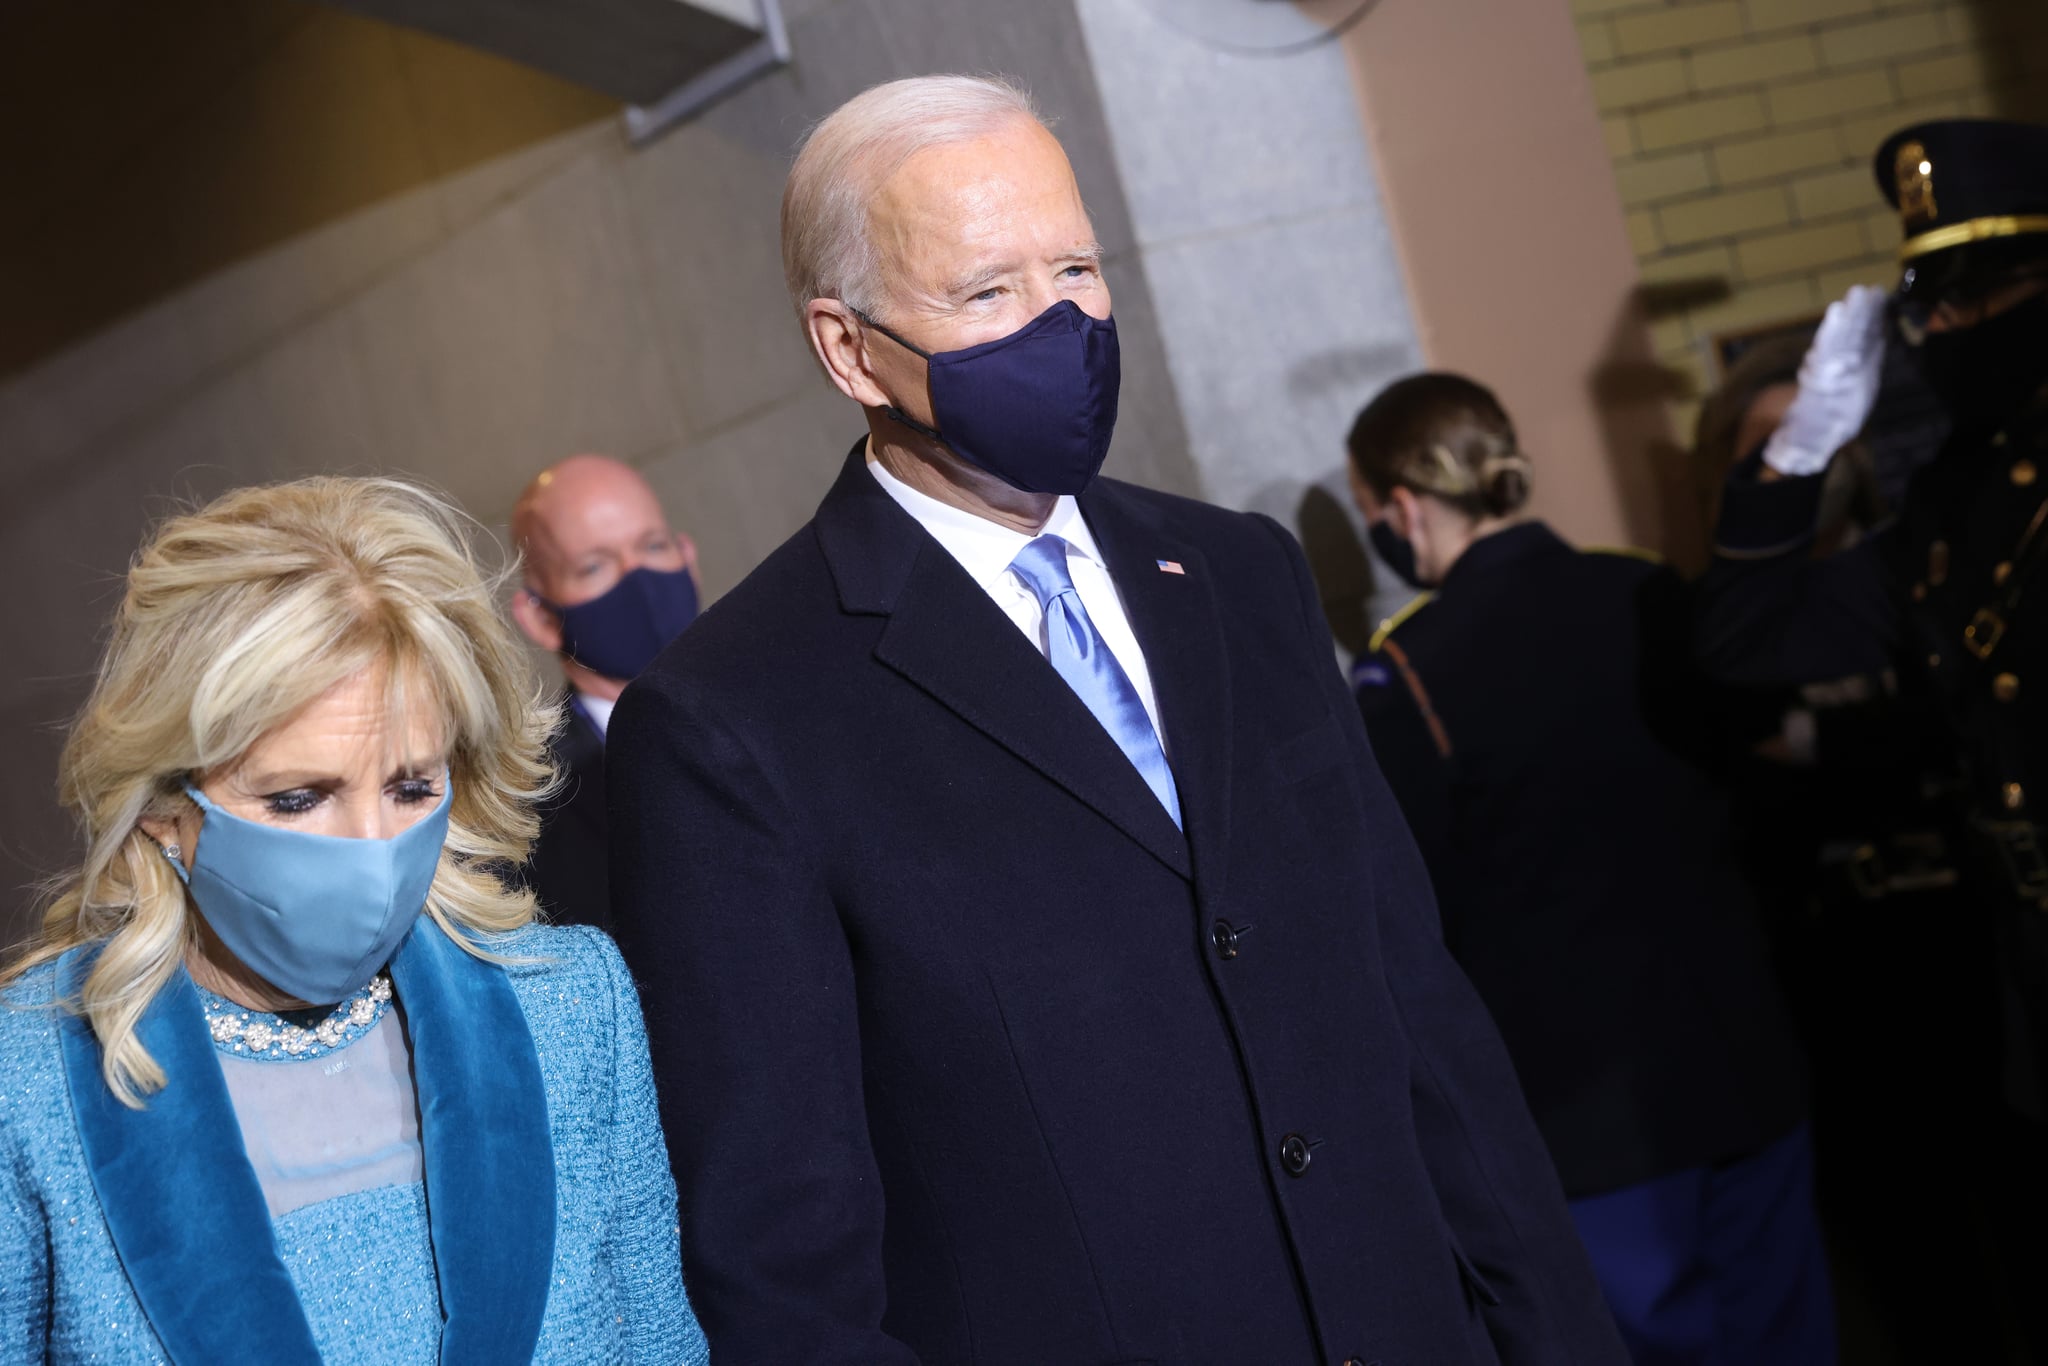 Joe Biden Wears a Navy Ralph Lauren Suit For Inauguration | POPSUGAR Fashion